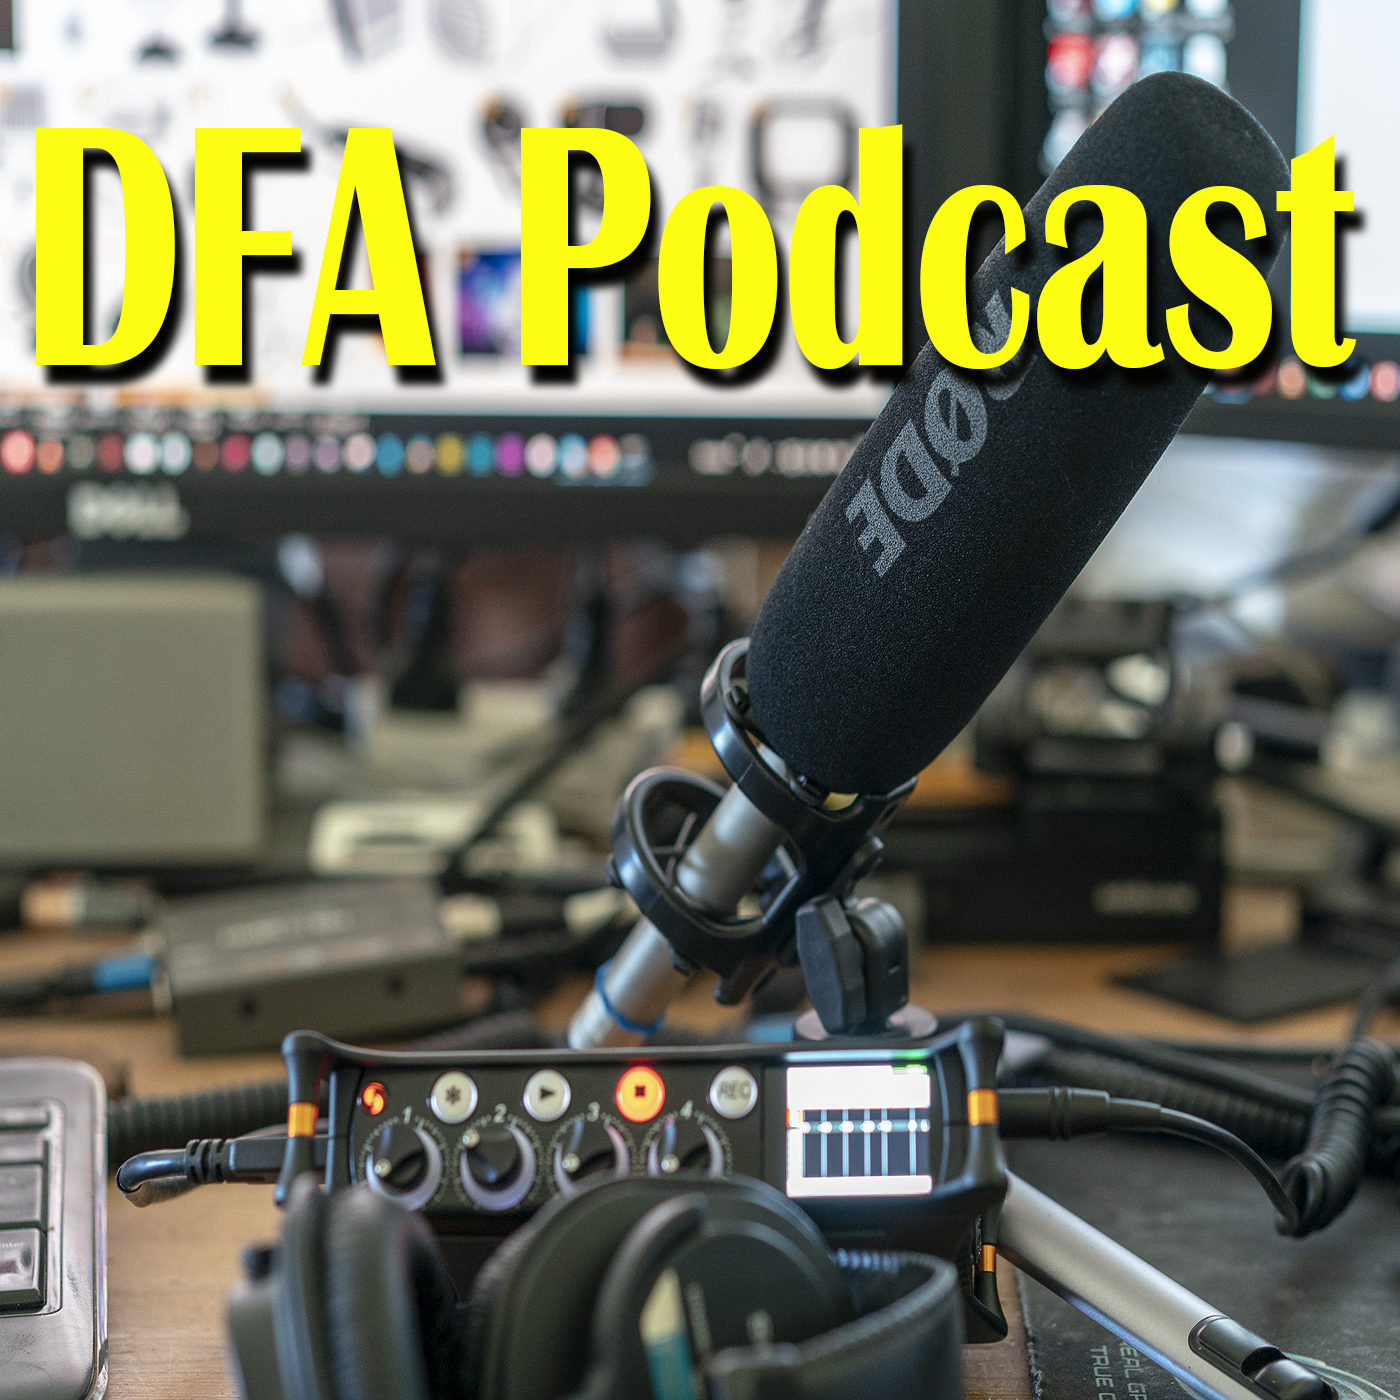 DFA Updated Scenarios And Live Show Recording 18 June 2019 [Podcast]